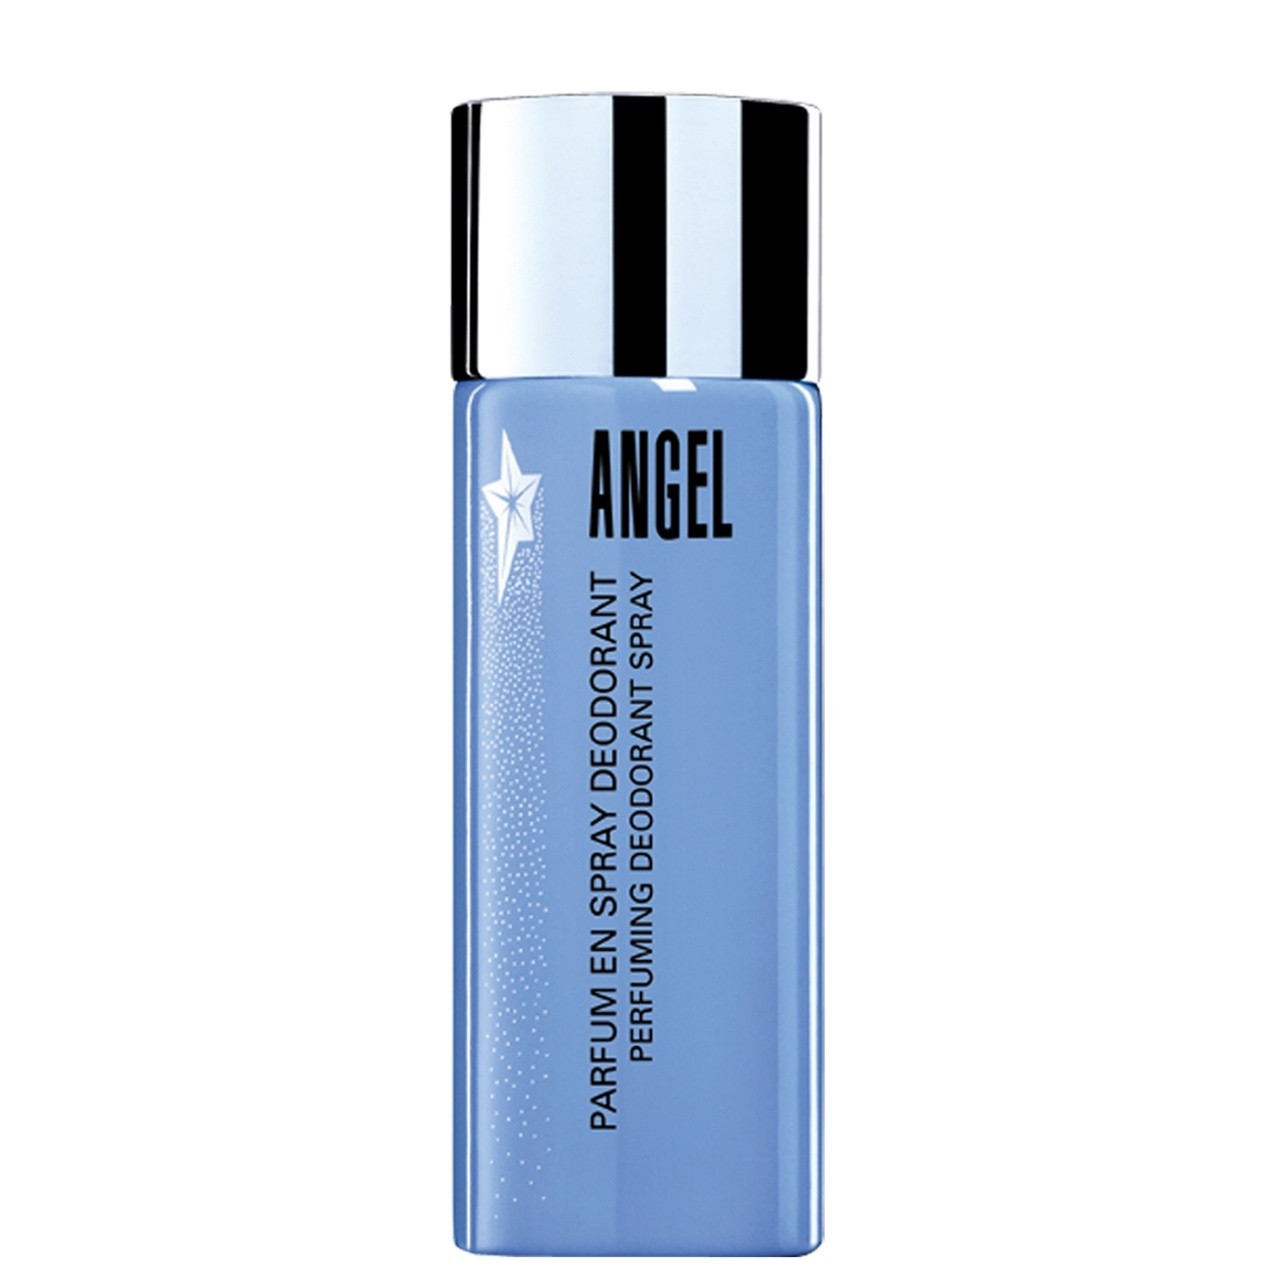 Thierry Mugler Angel Donna Deodorante spray 100 ml